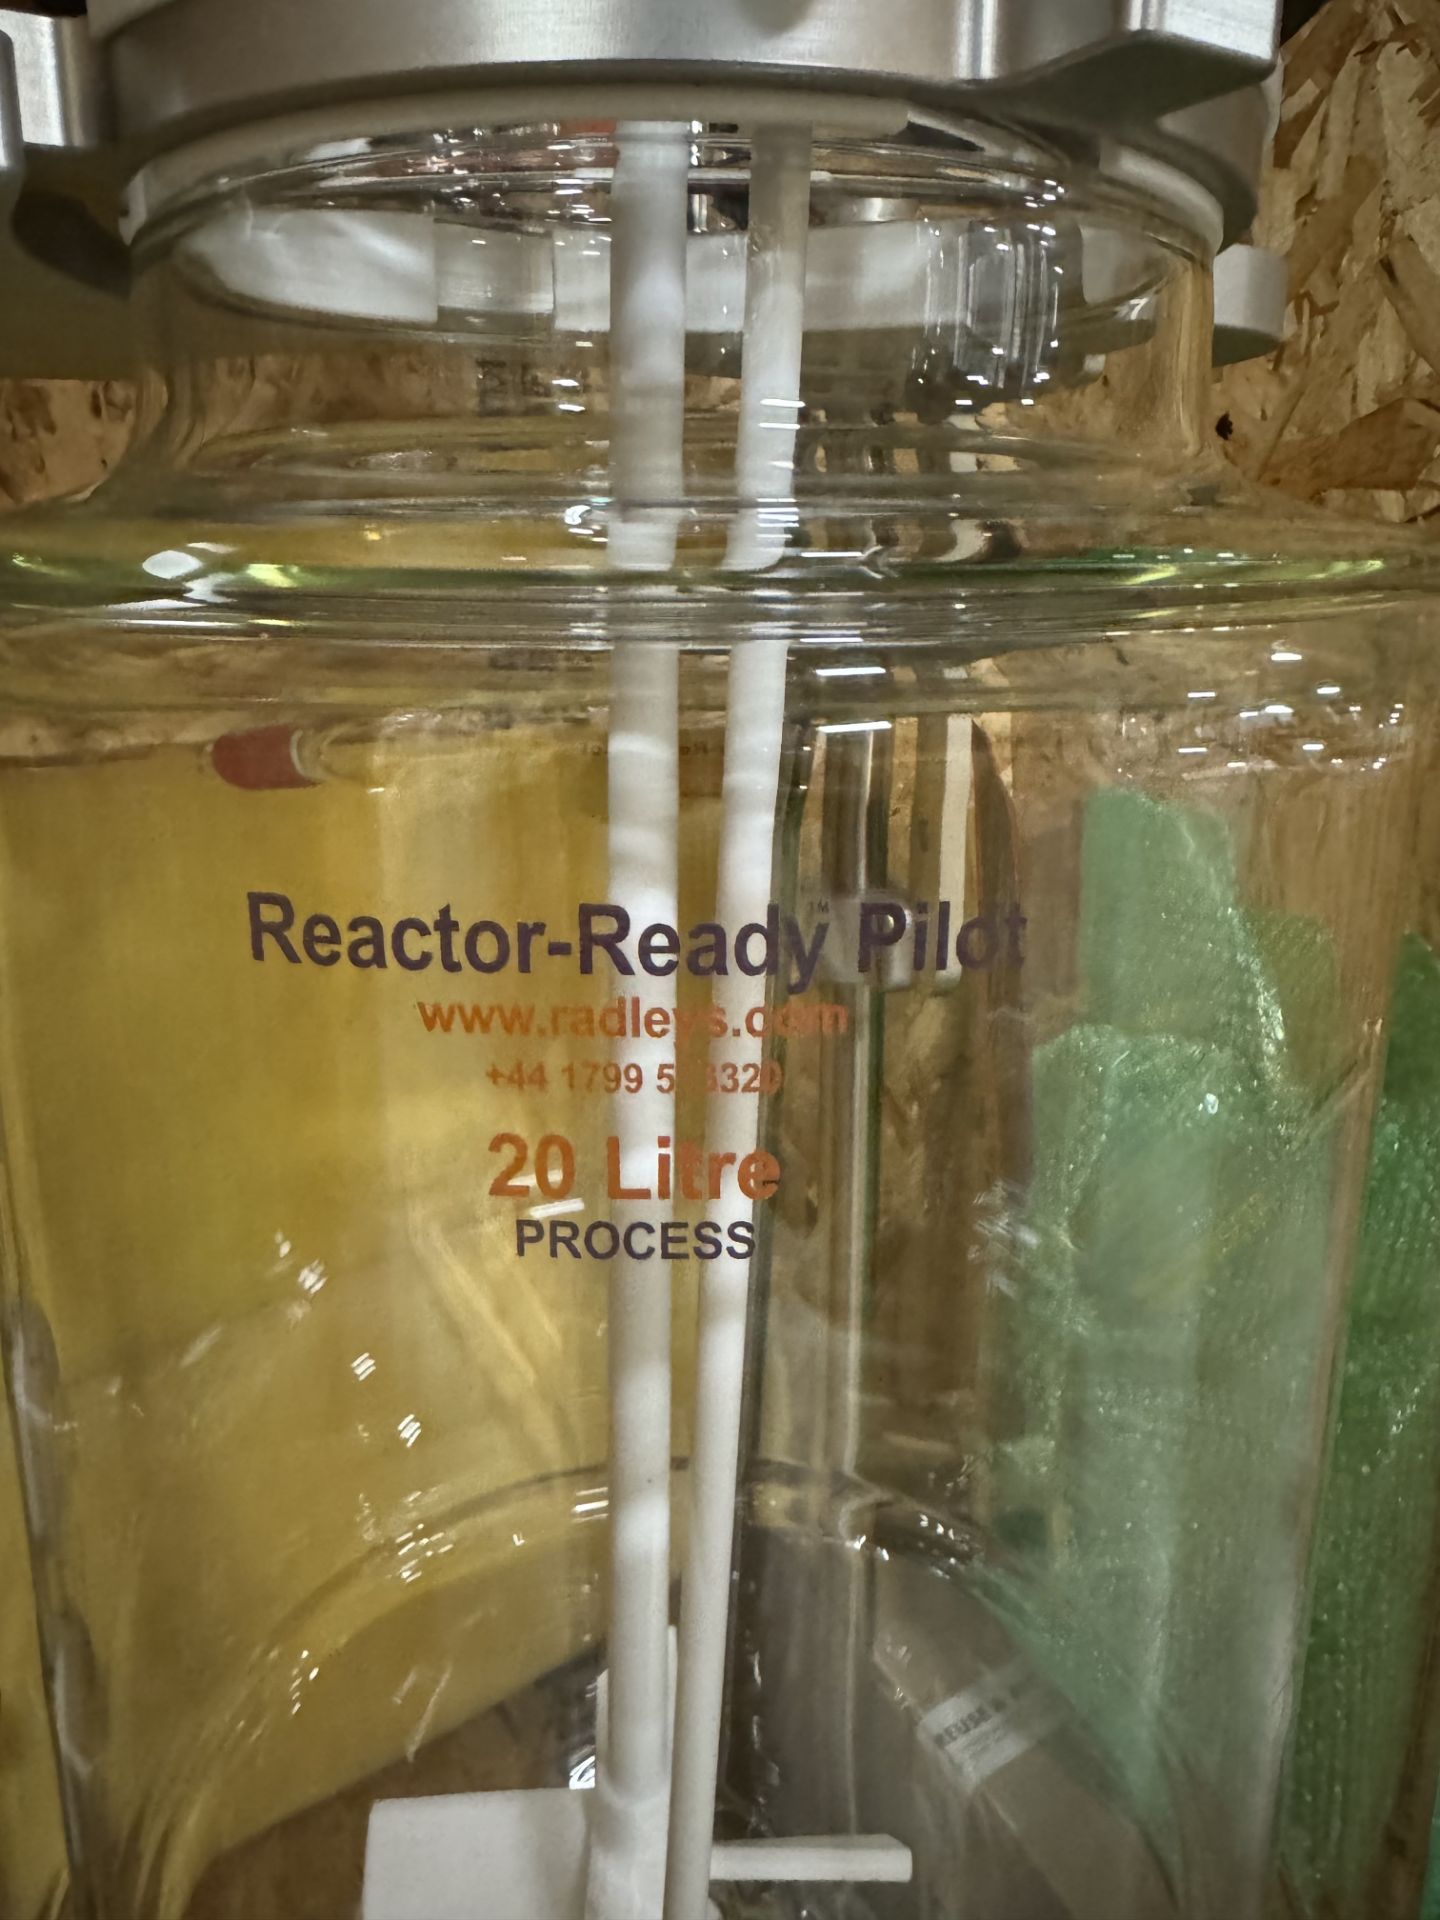 New/Unused Radleys Reactor-Ready Pilot Lab 20L Single Jacketed Reactor w/ 7 Neck Lid. Model RR220035 - Image 3 of 8